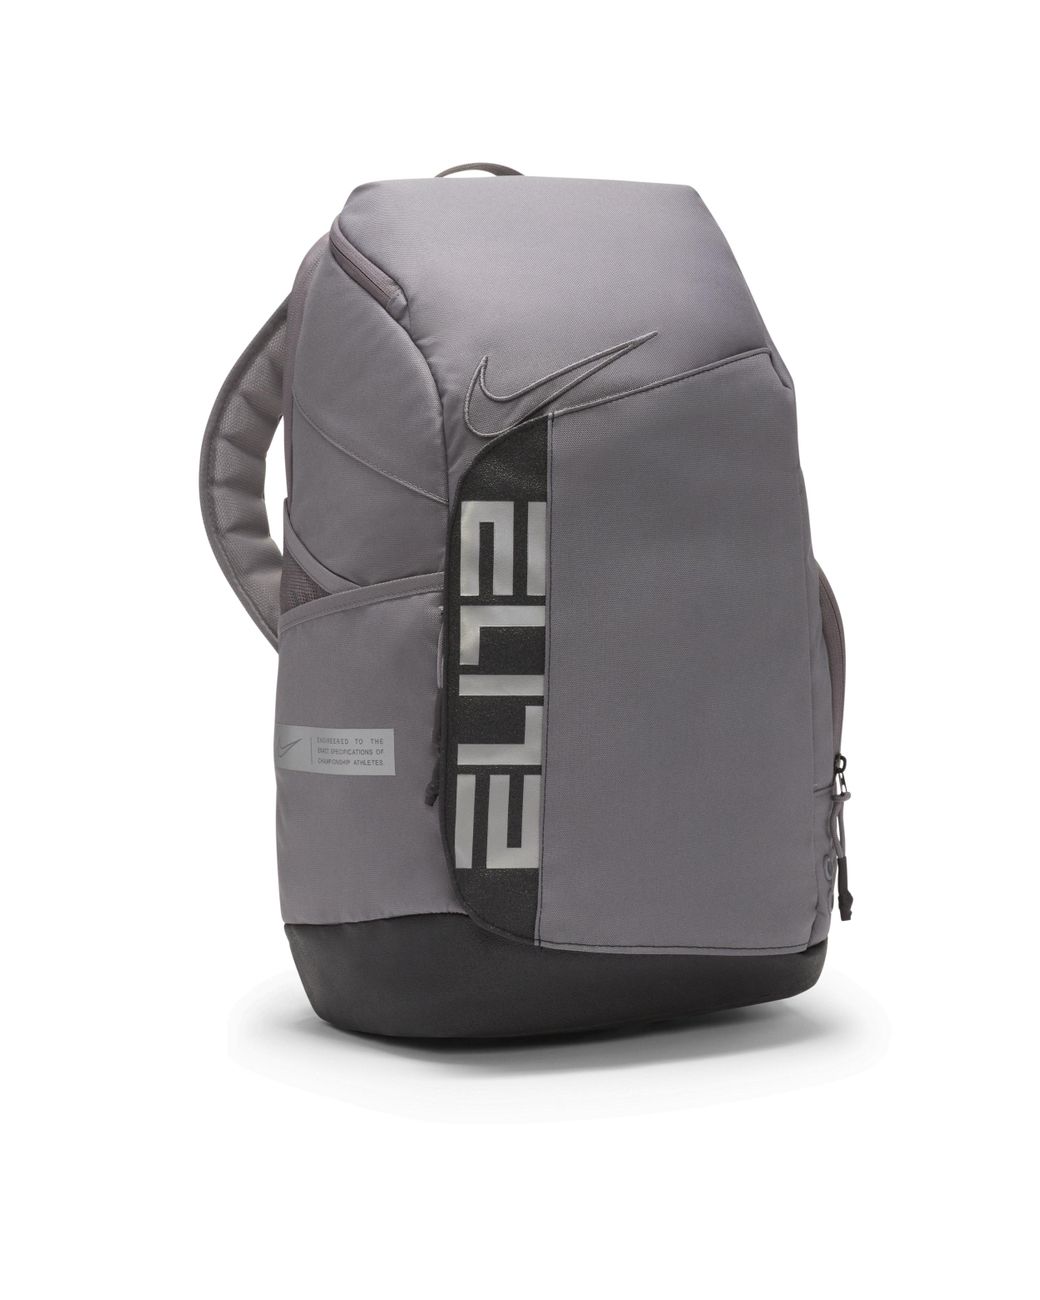 Elite Bags essential bag for diabetics - Diabetyk24